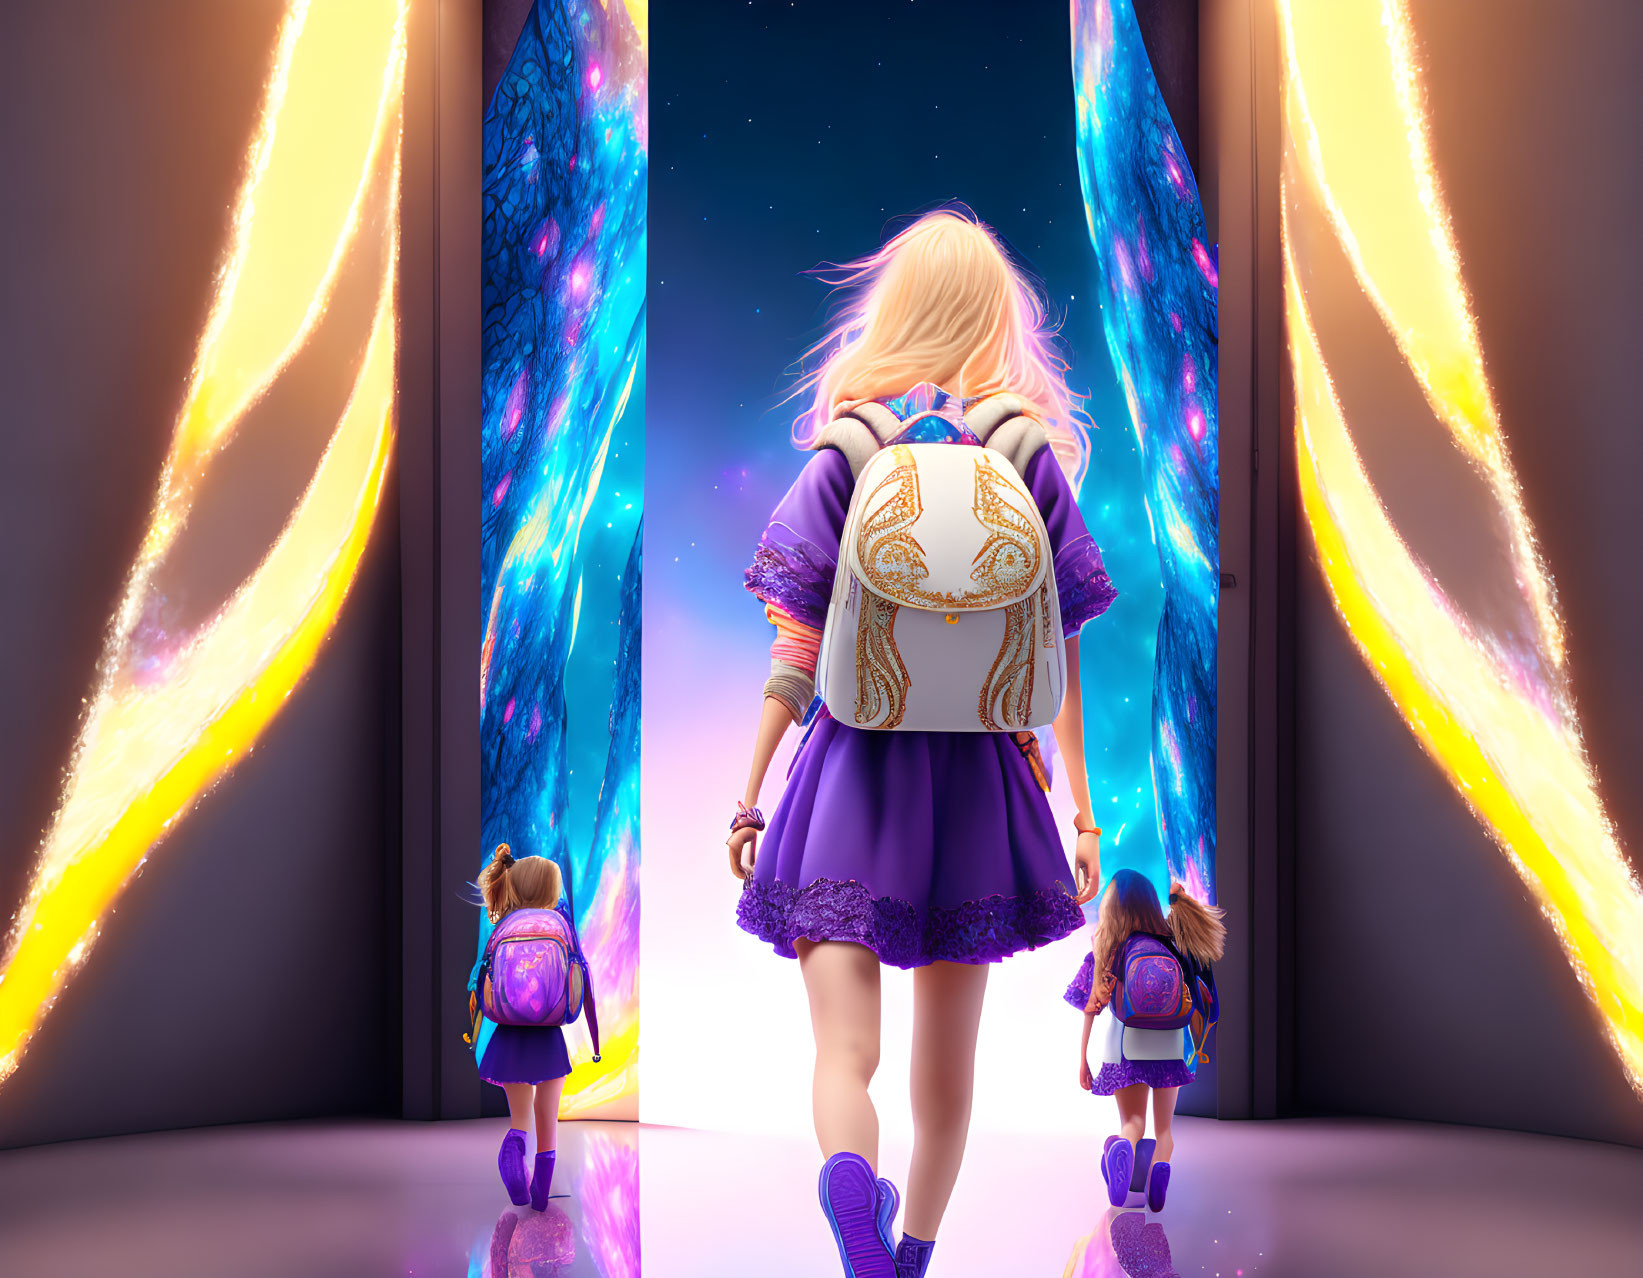 Blonde girl near vibrant portal with cosmic backdrop